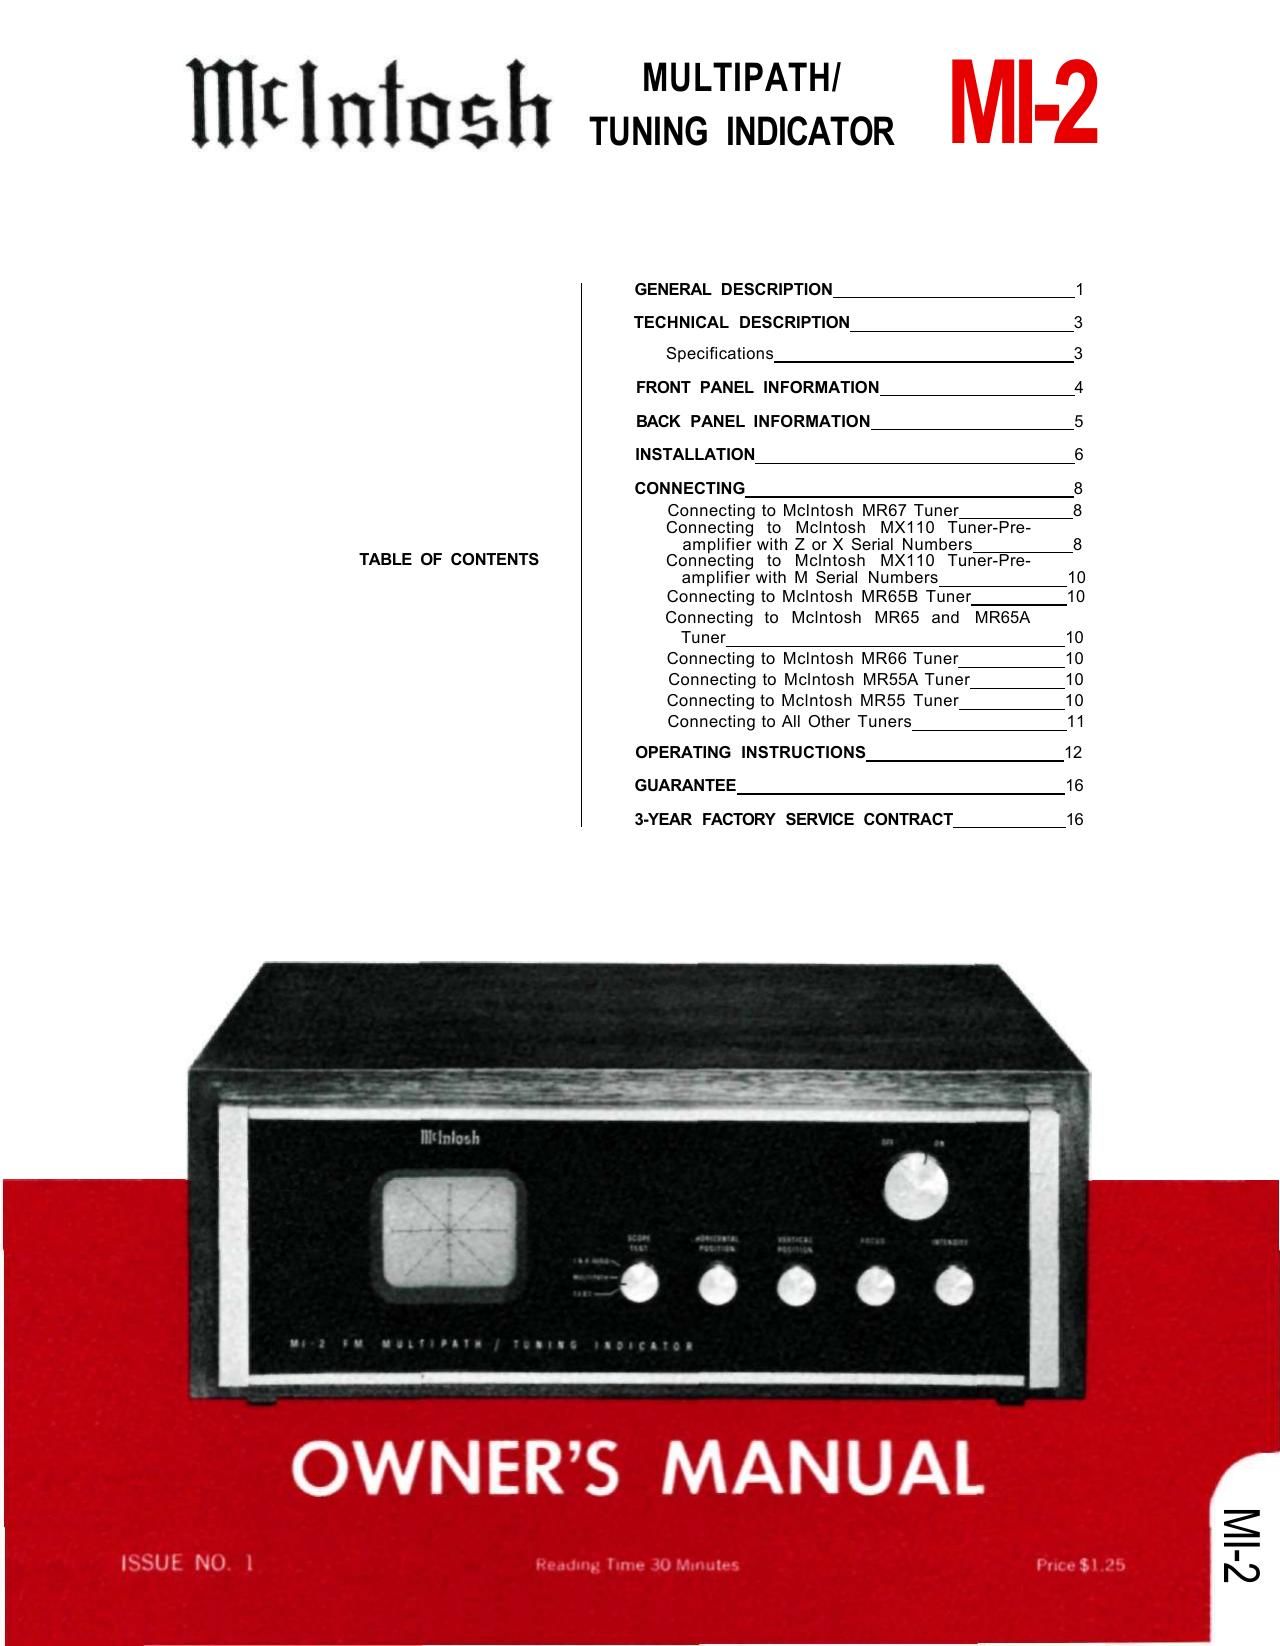 McIntosh MI 2 Owners Manual